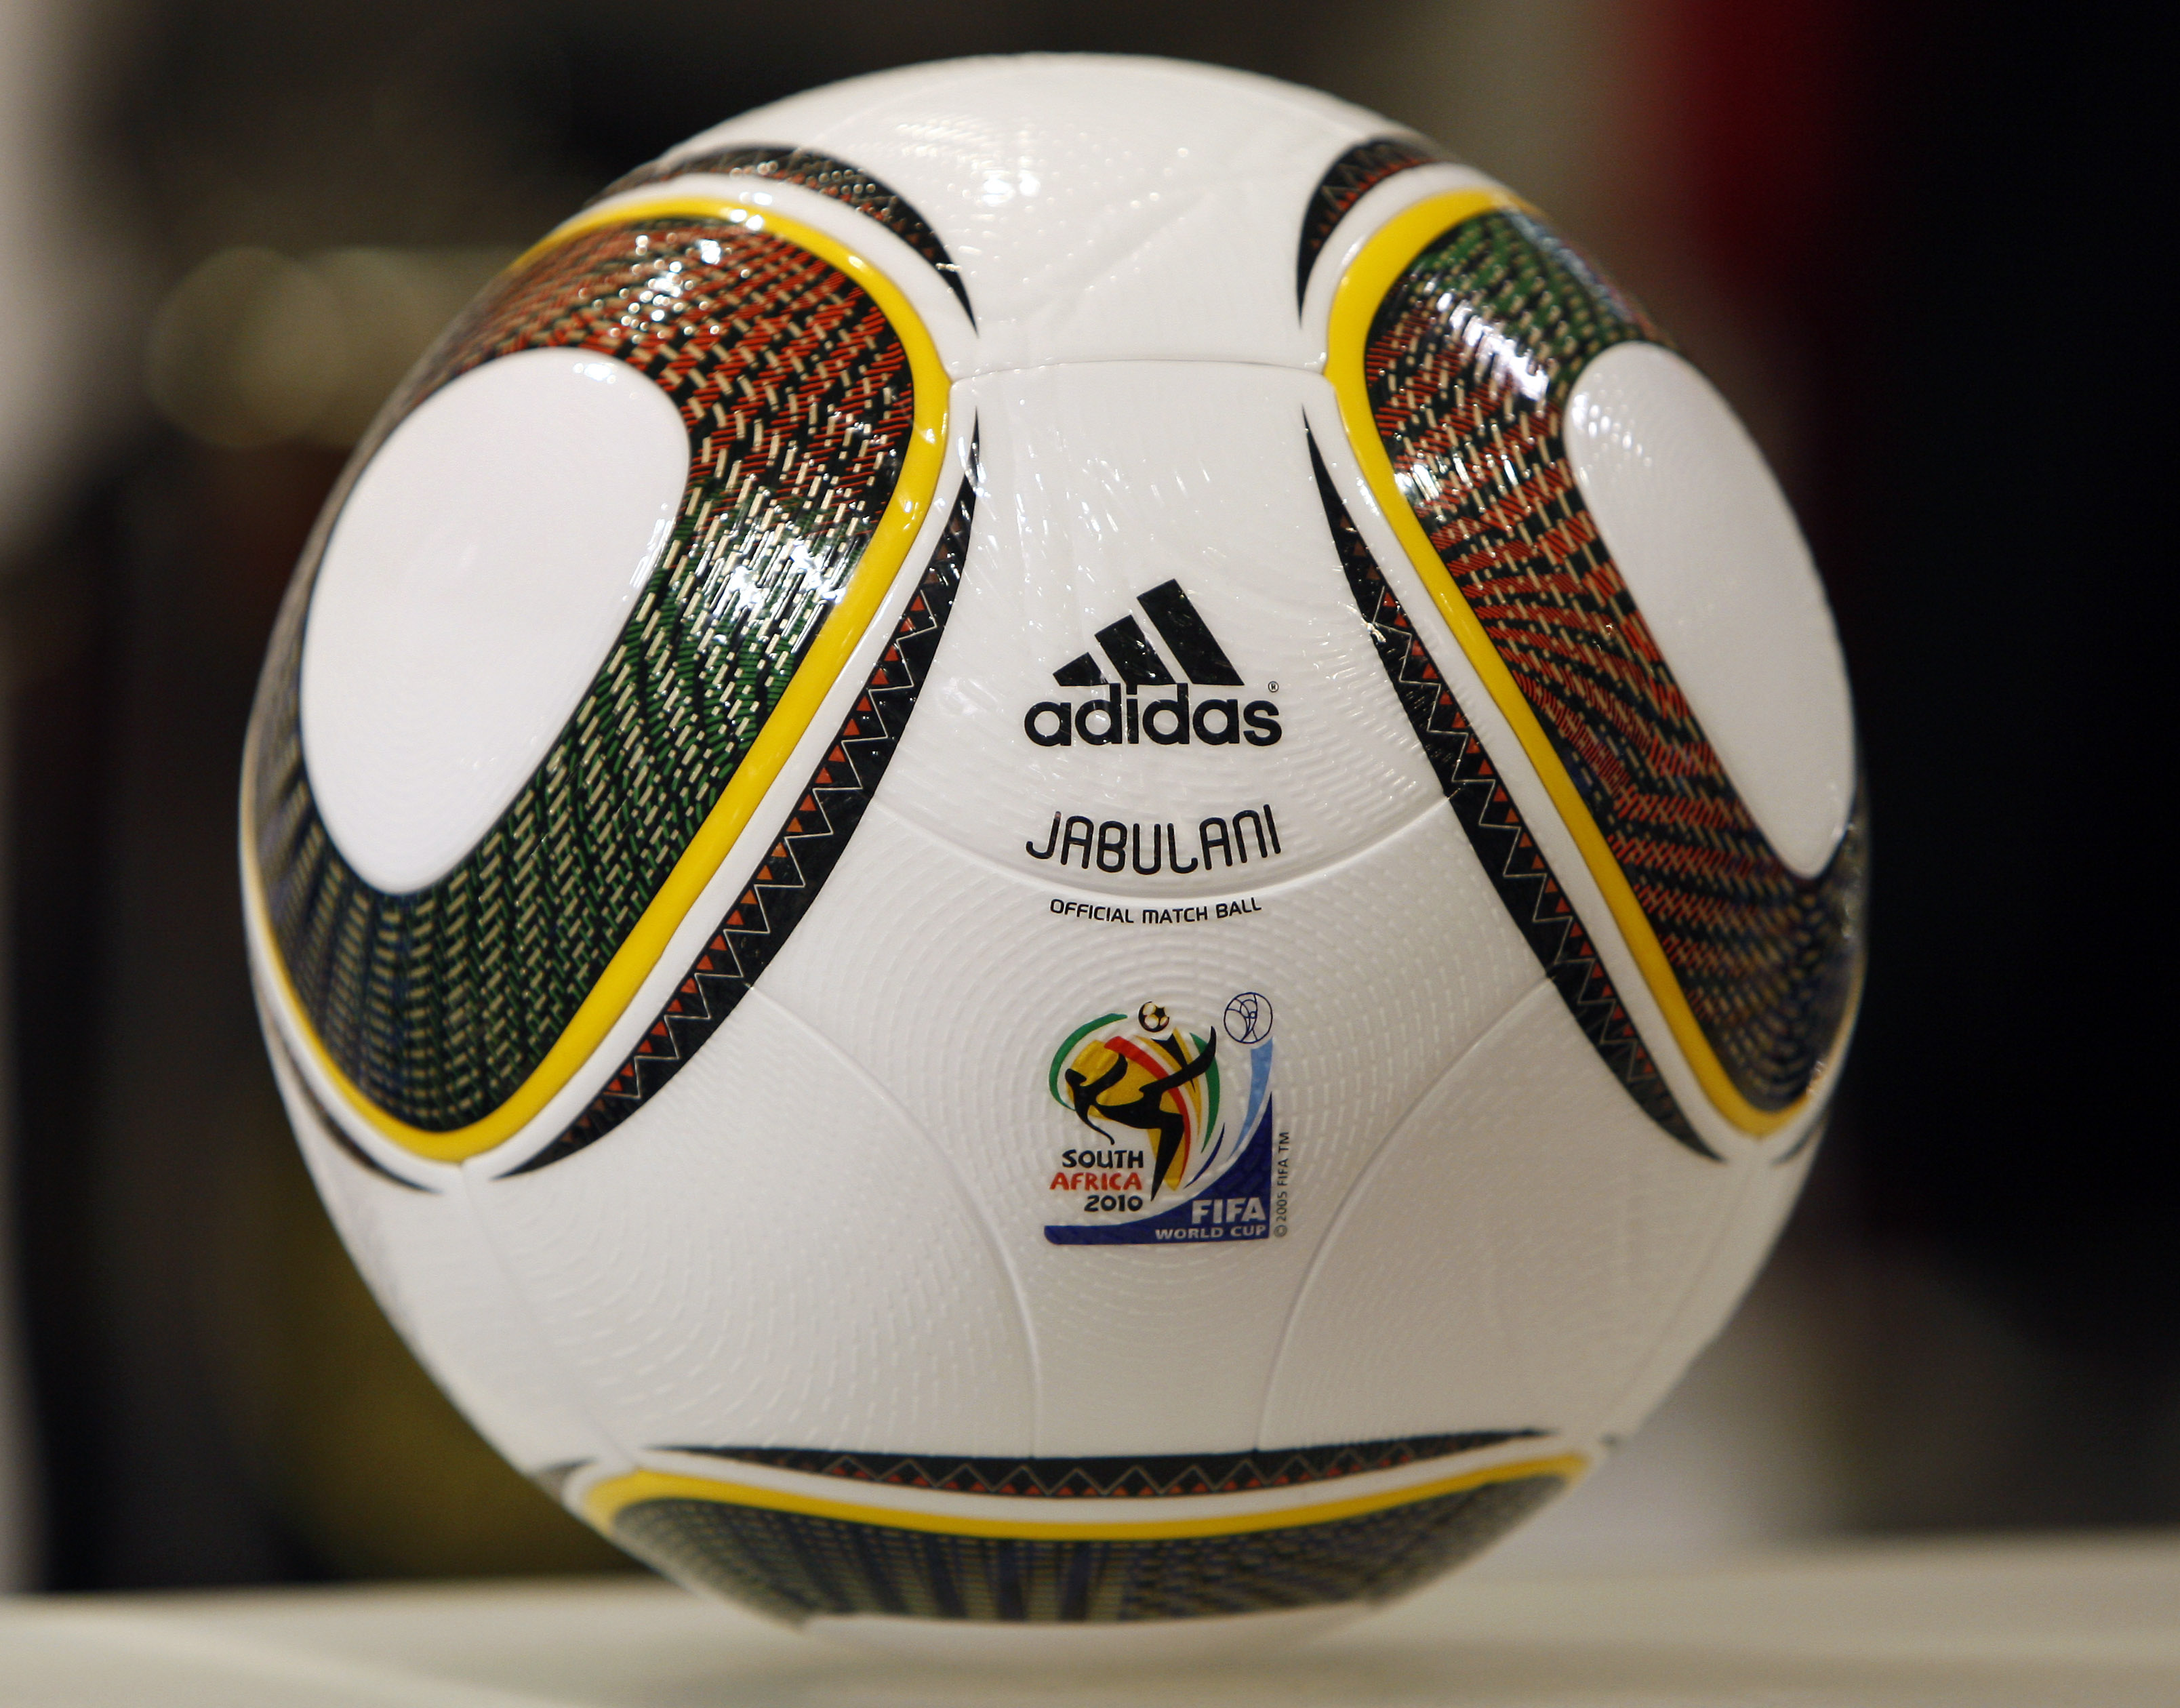 VM i Sydafrika, Jabulani, Julio Ceasar, Iker Casillas, Adidas